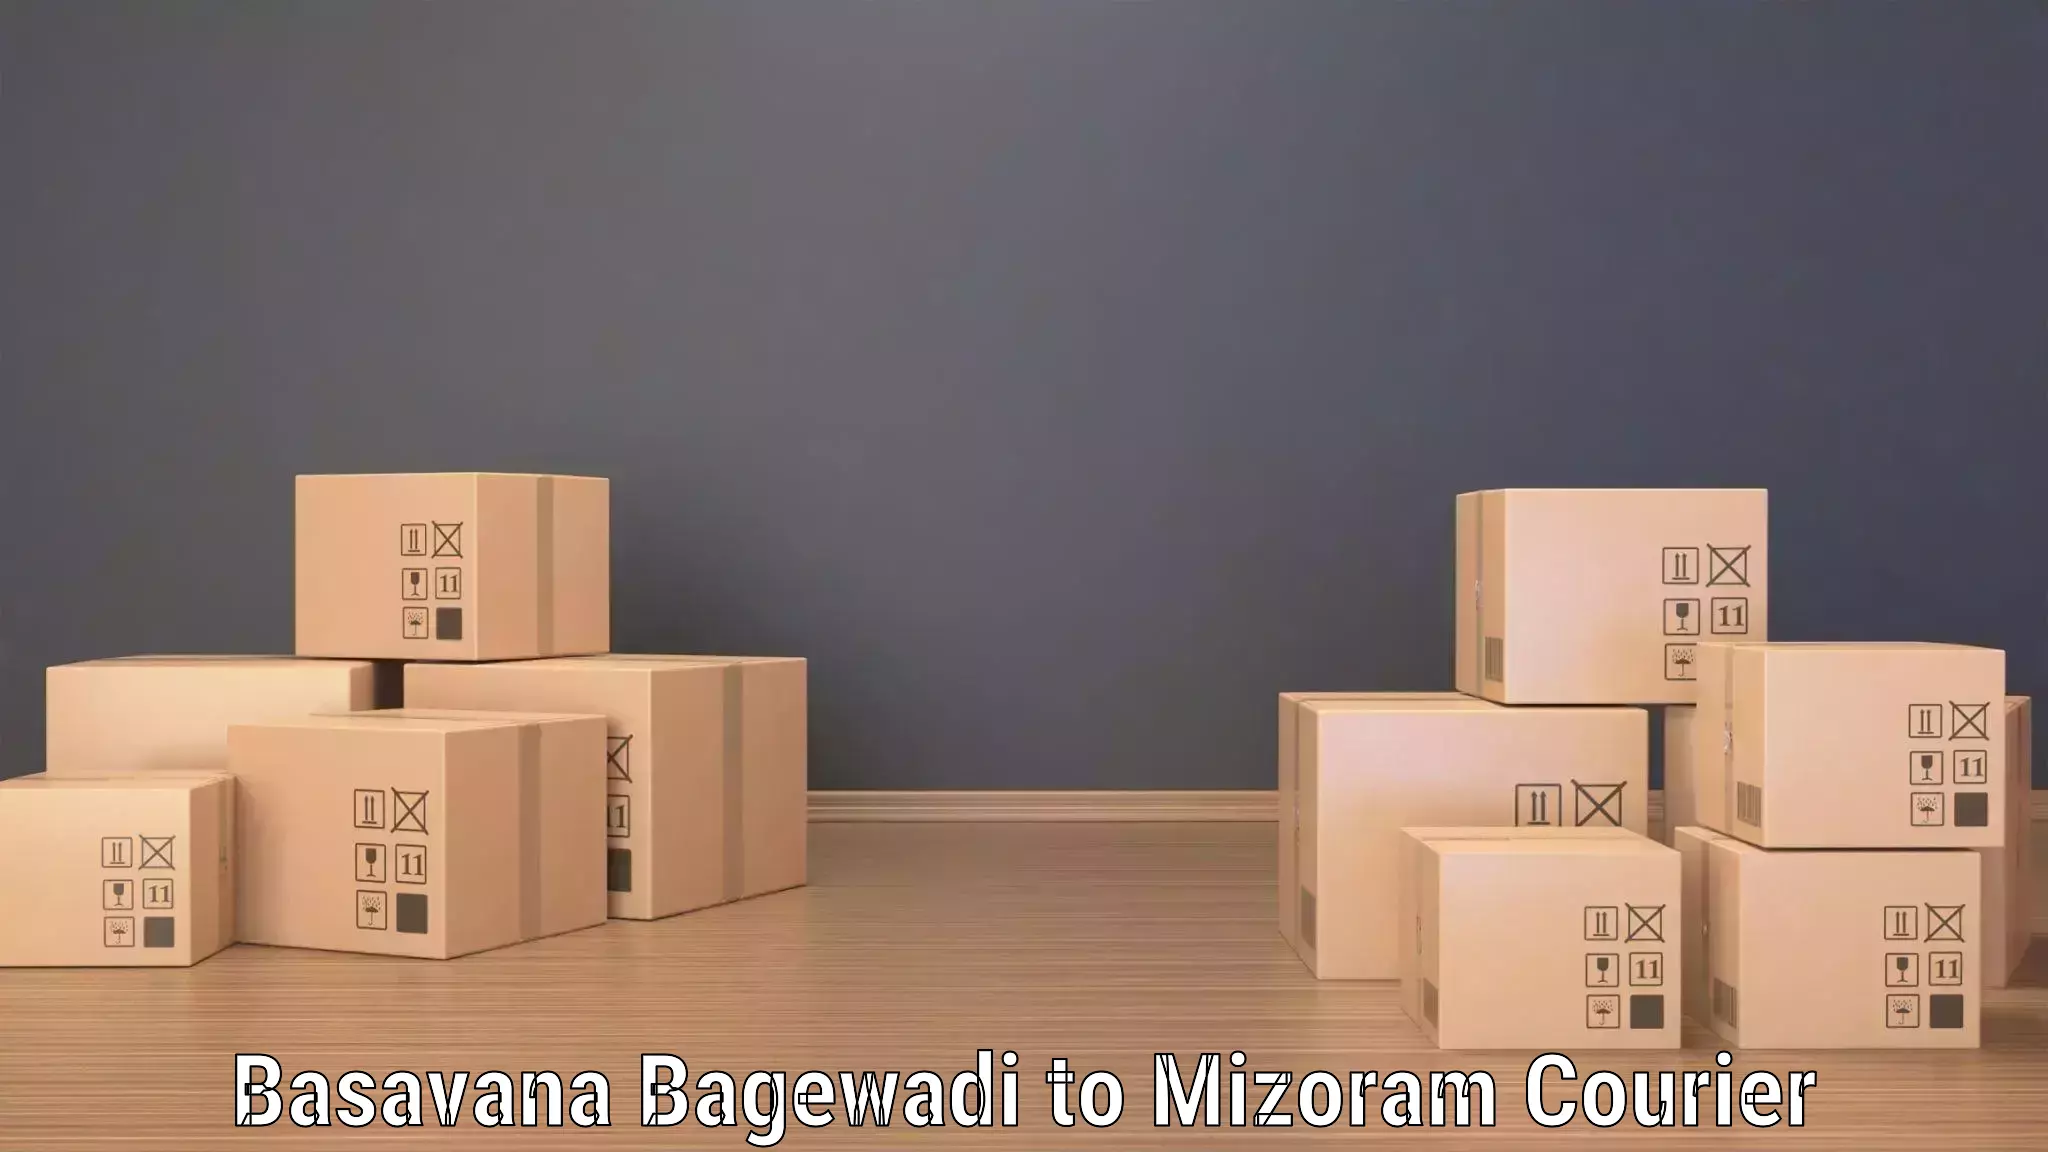 Express delivery capabilities Basavana Bagewadi to Serchhip